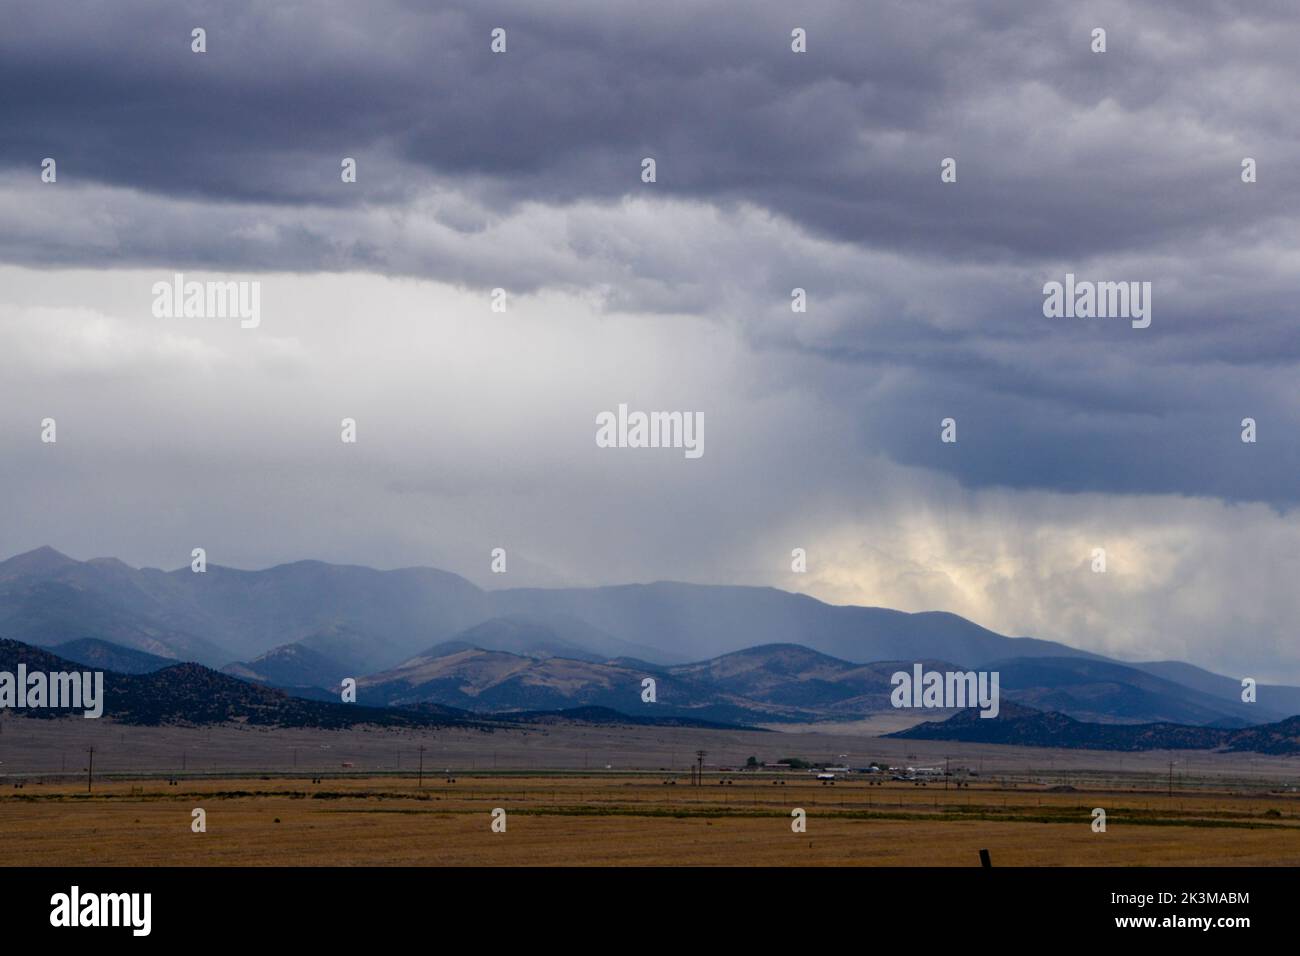 Sturmwolken lassen Regen über die fernen Berge in der hohen Wüste nahe Moffat in Colorado, USA, fallen Stockfoto